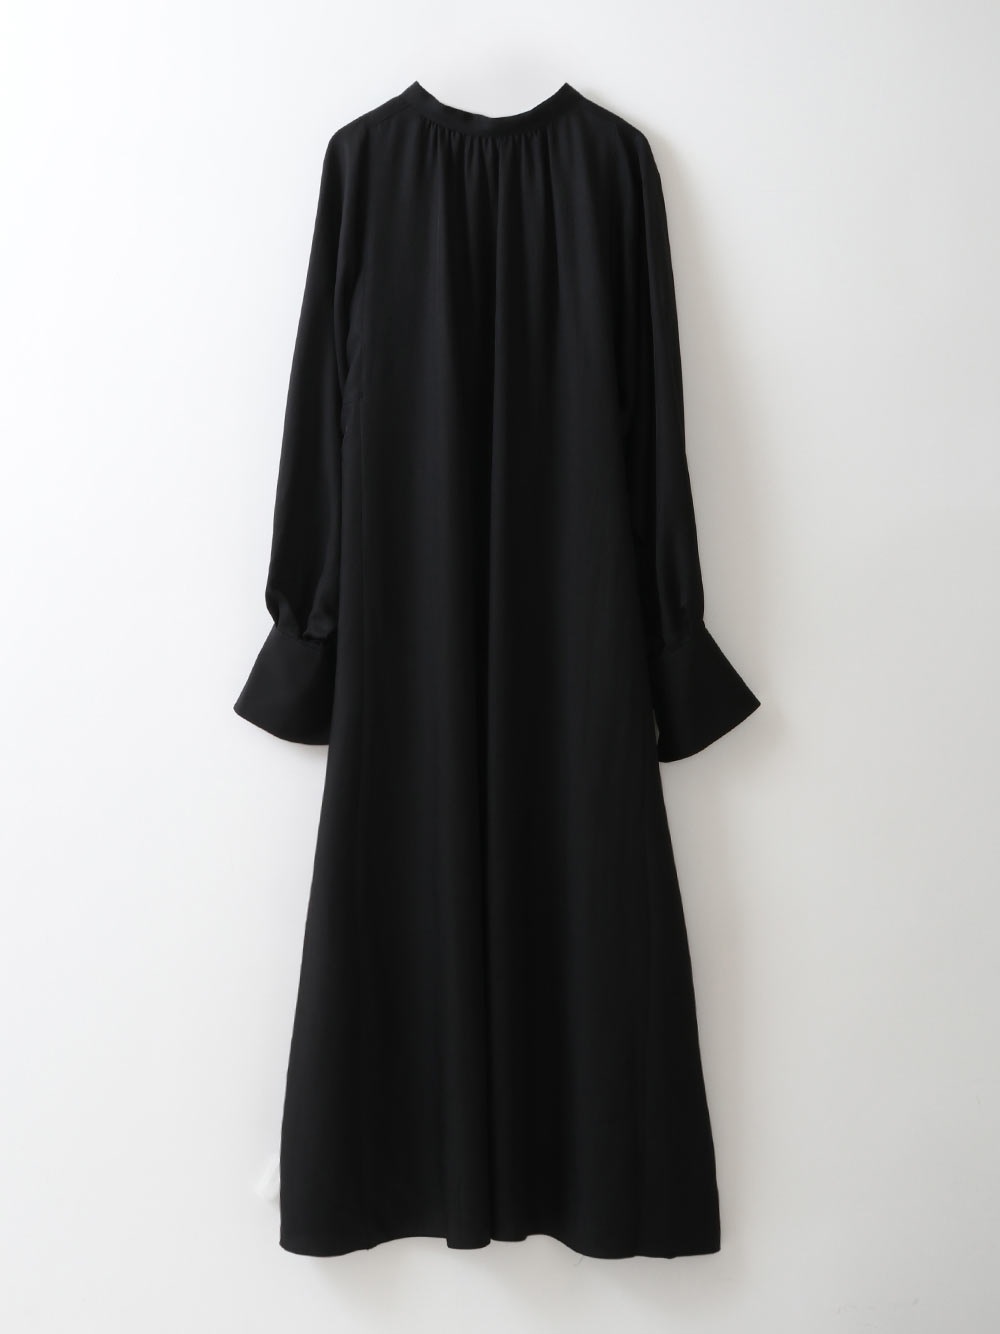 Gathered Dress(00ブラック-フリー)